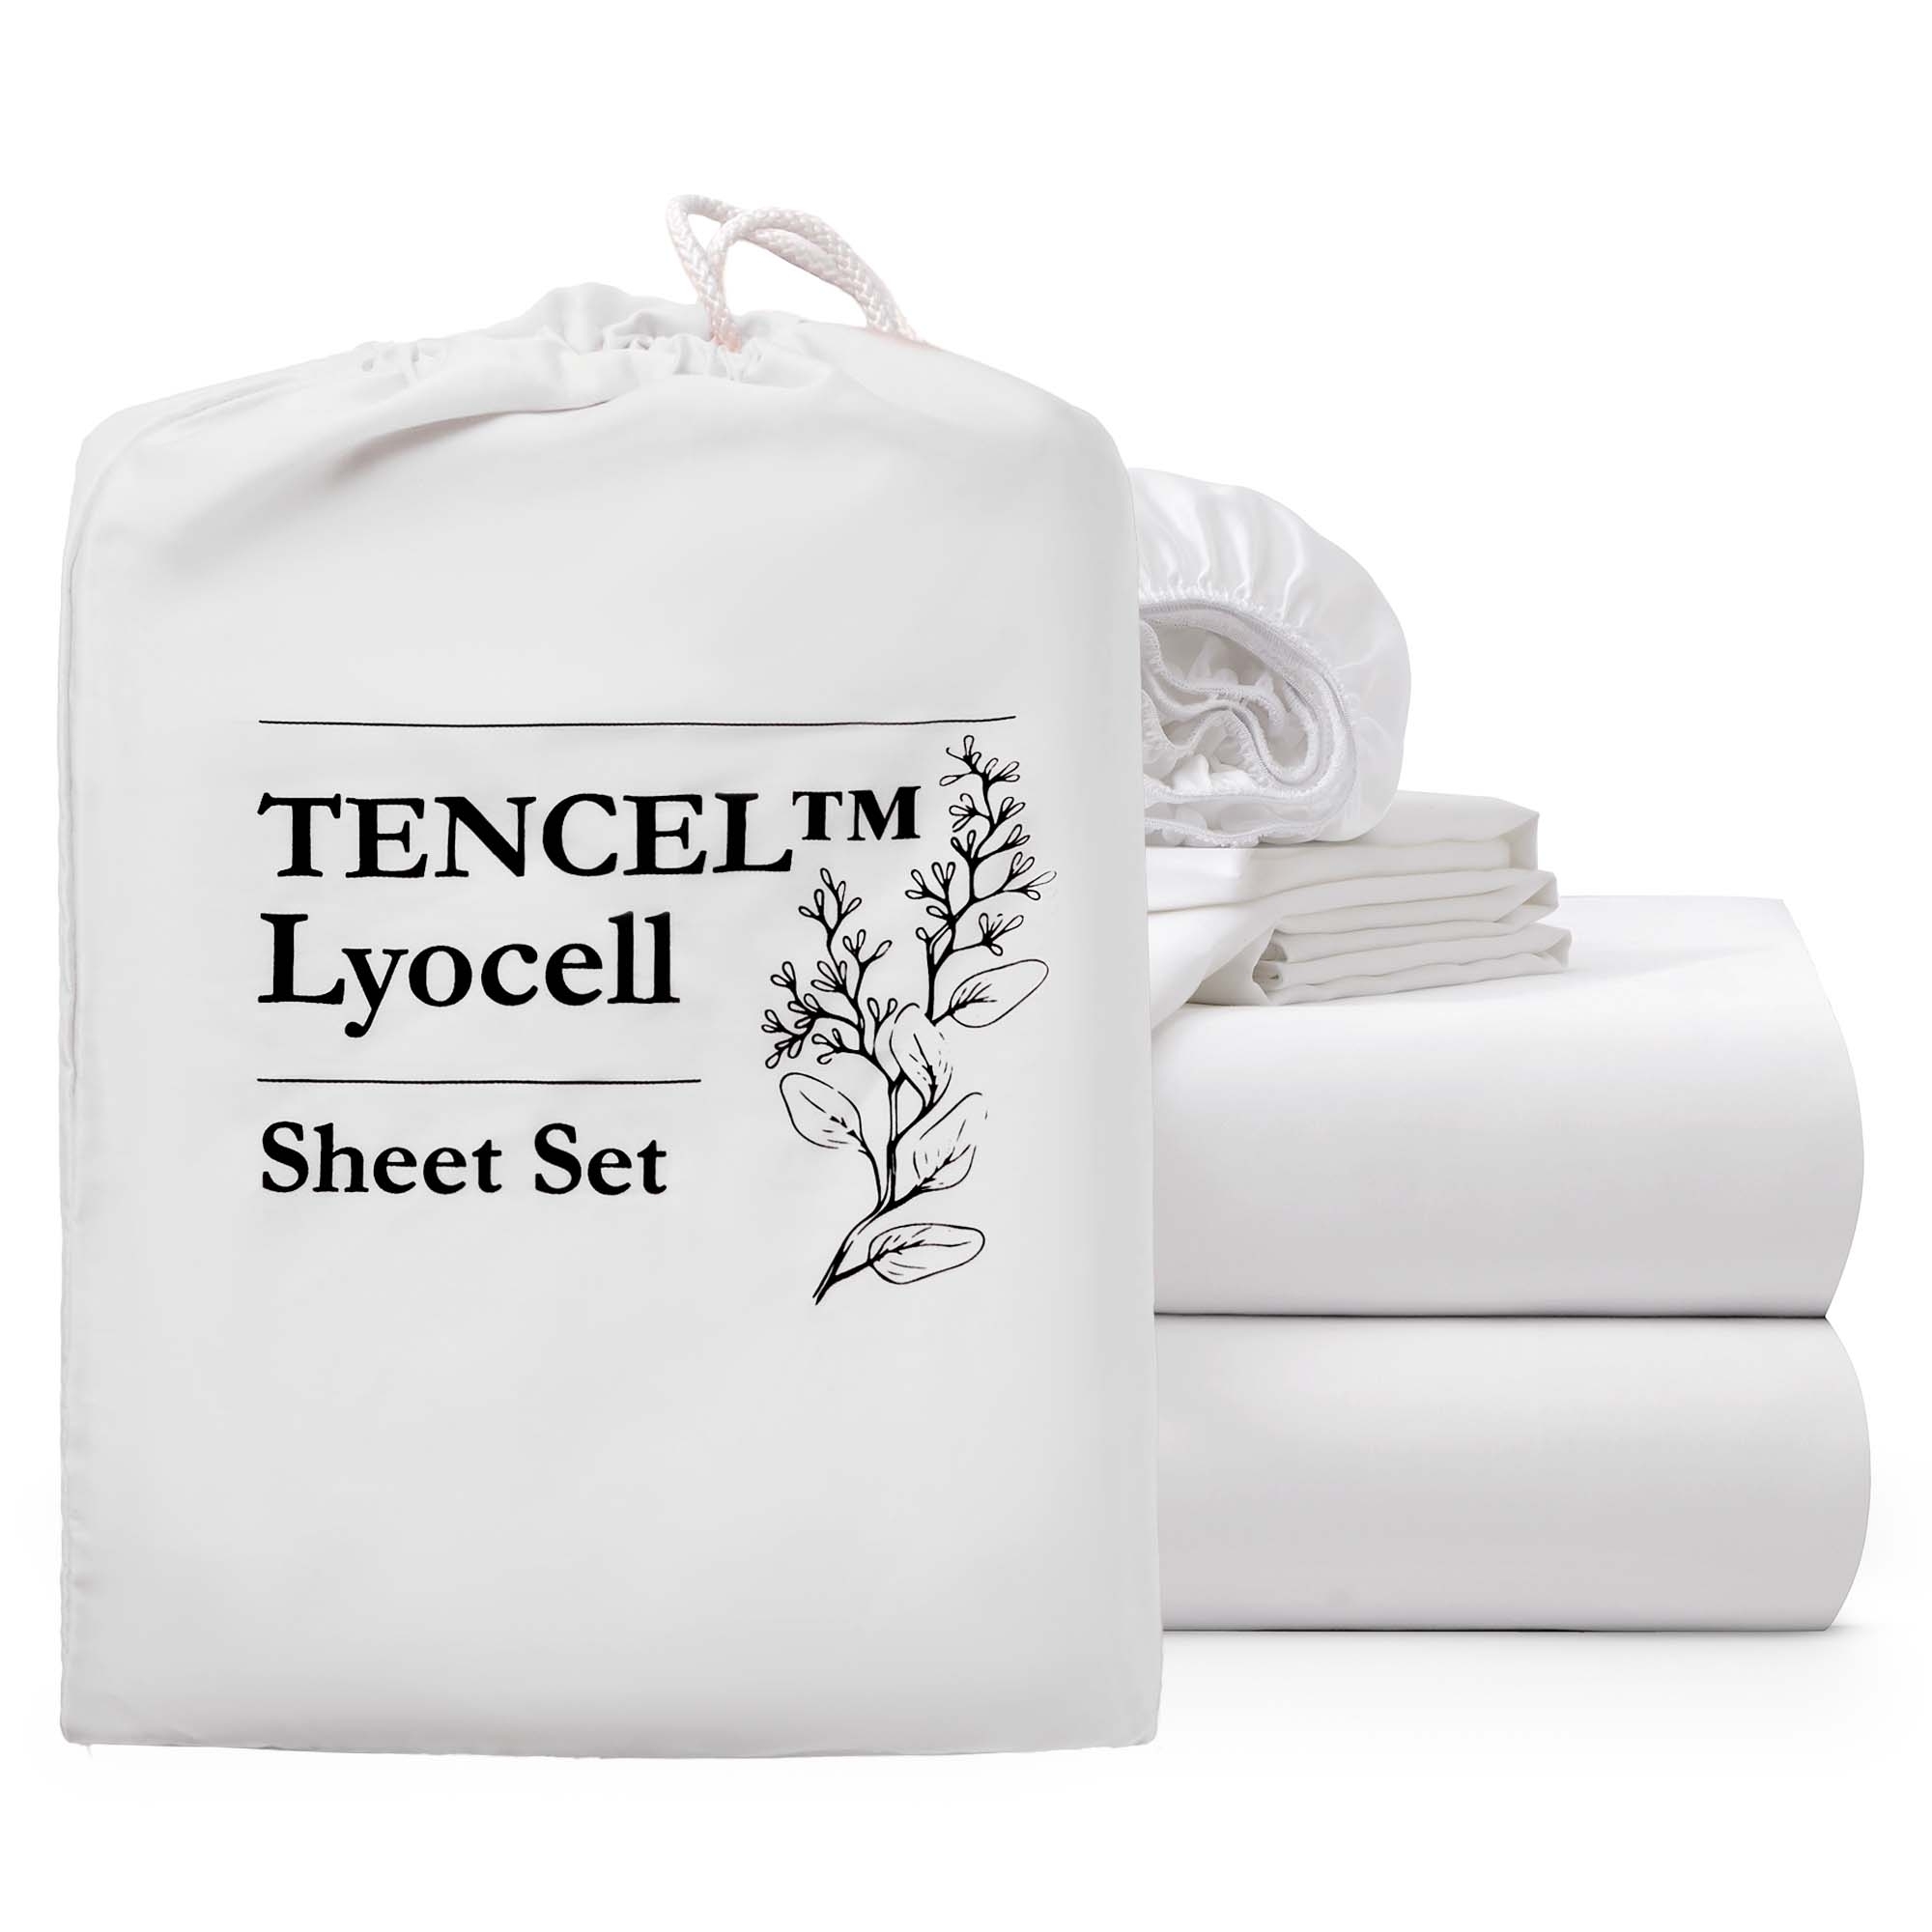 Silky Soft TENCELâ¢ Lyocell Cooling Sheet Set-Breathability And Moisture-wicking Bedding Set - Quiet Grey, King